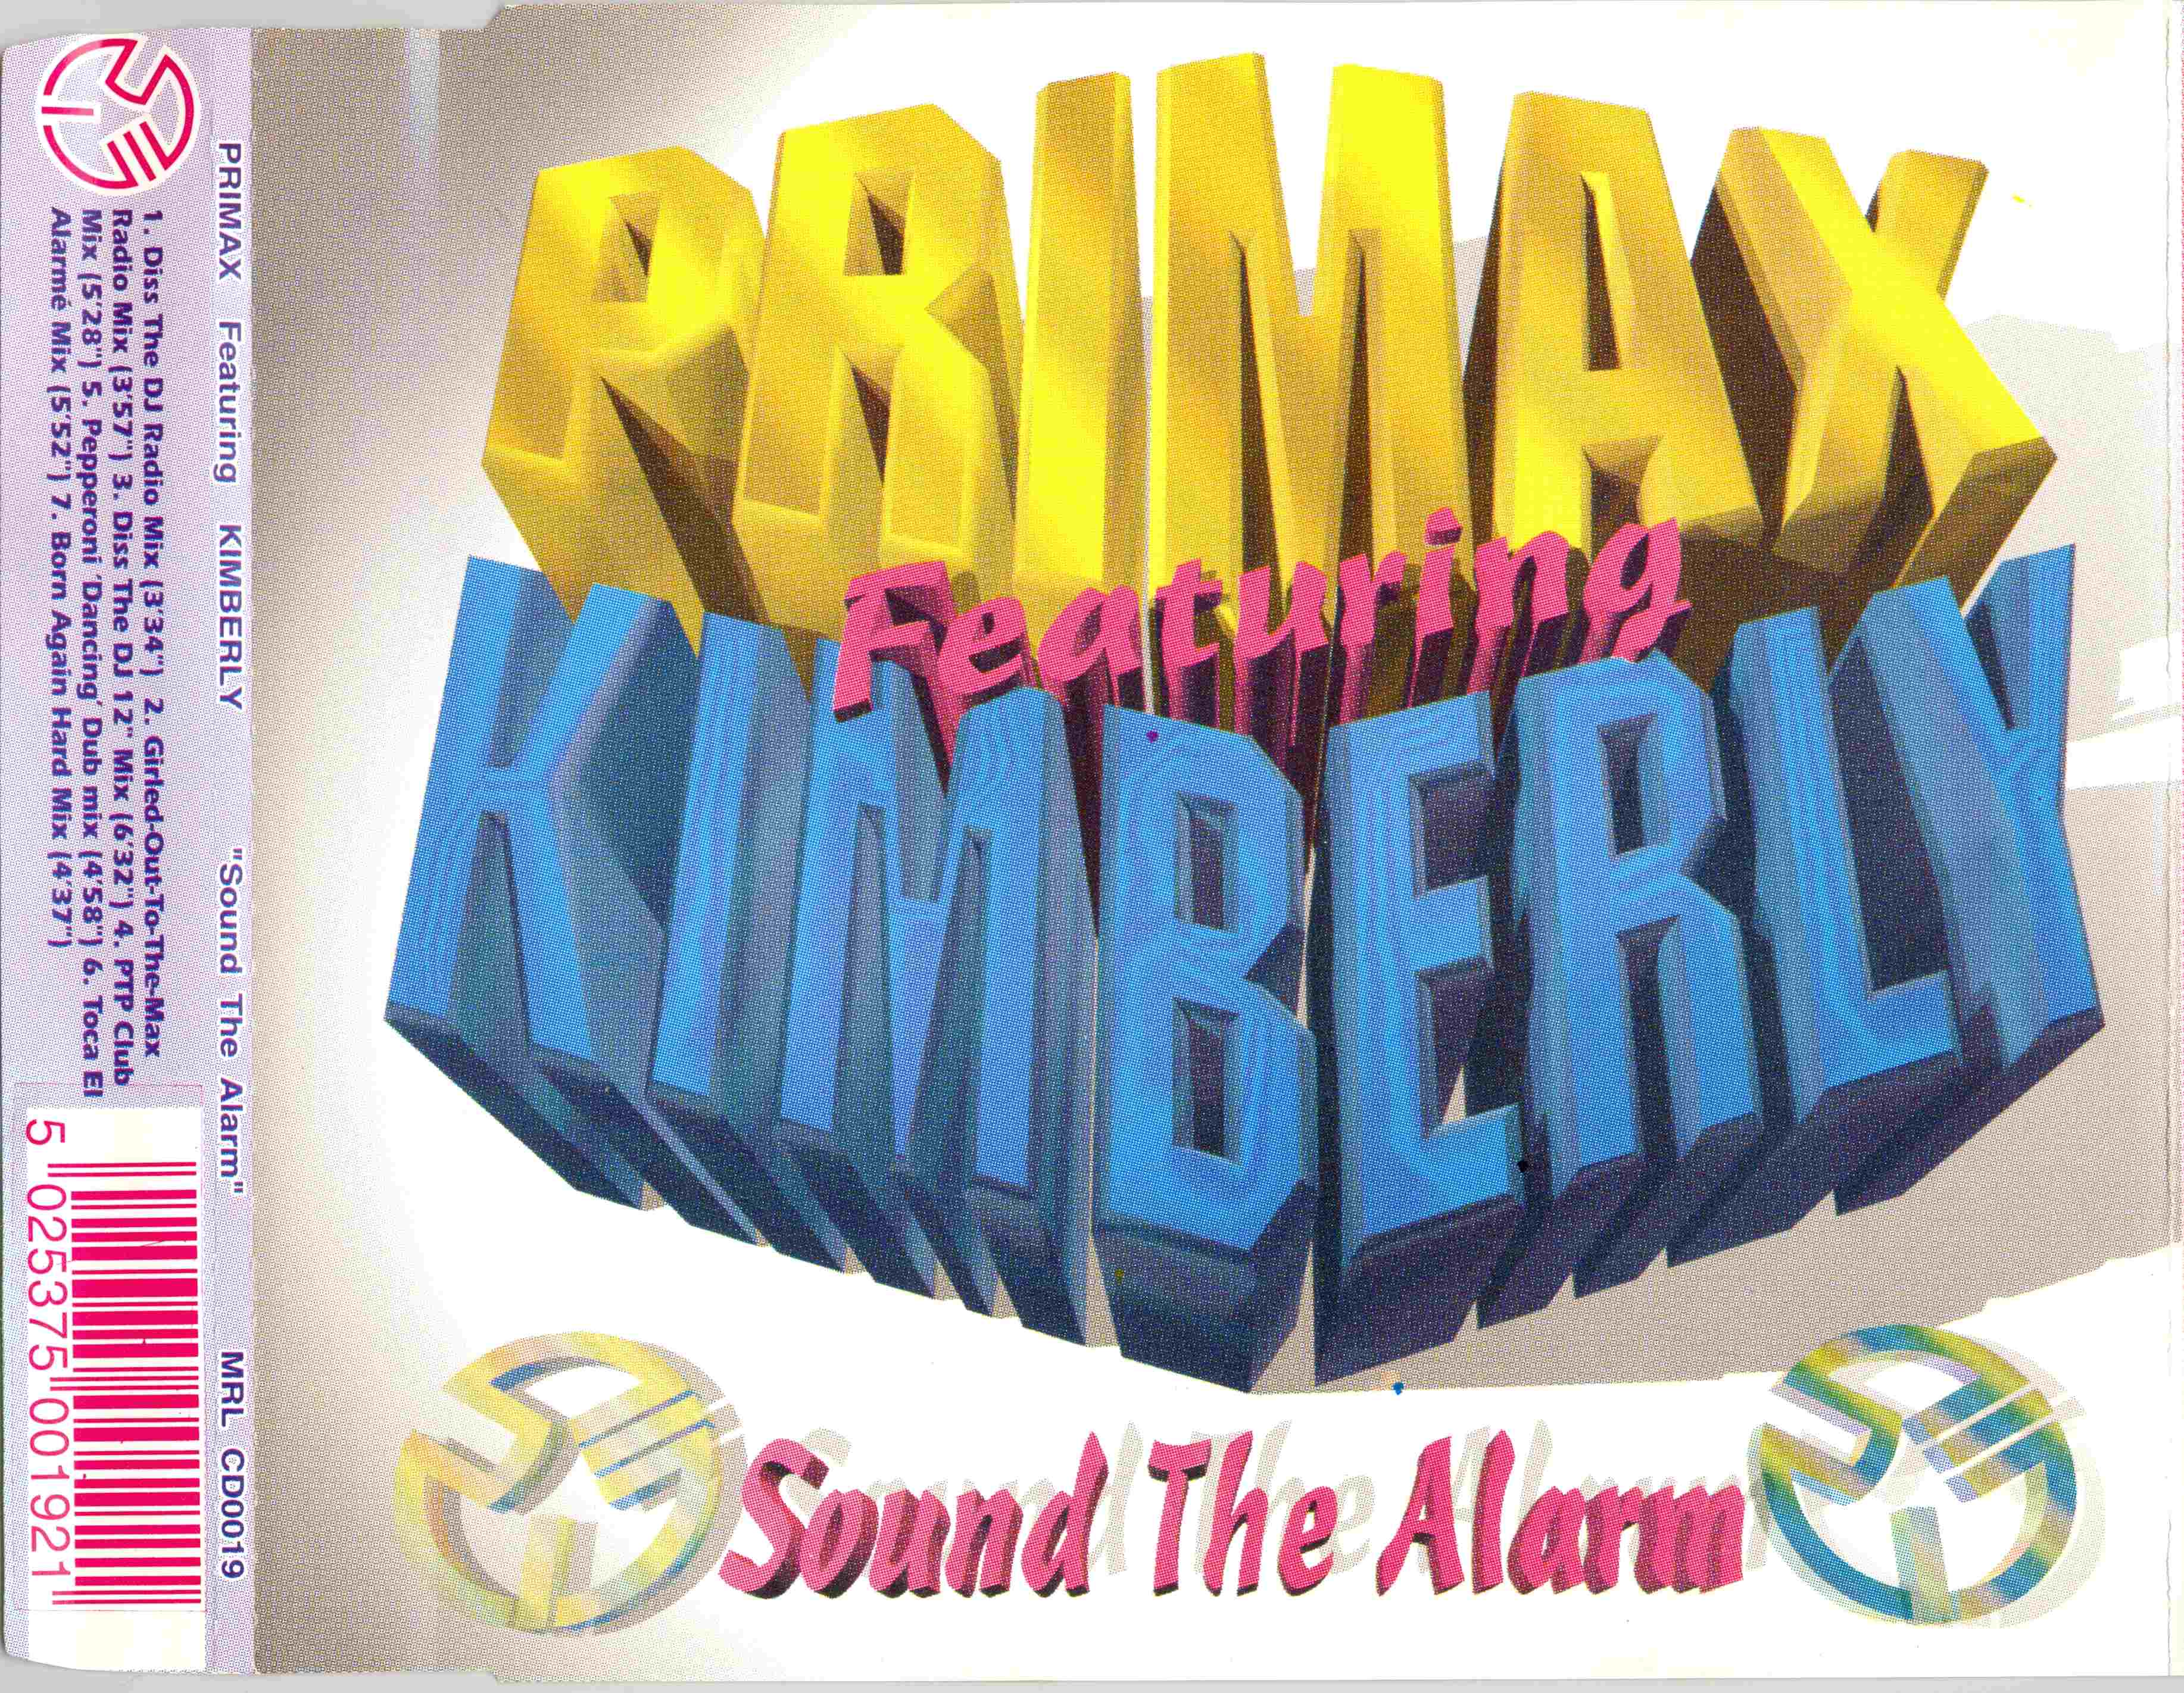 Primax Feat. Kimberly - Sound The Alarm (Maxi-CD) 1995 - UK